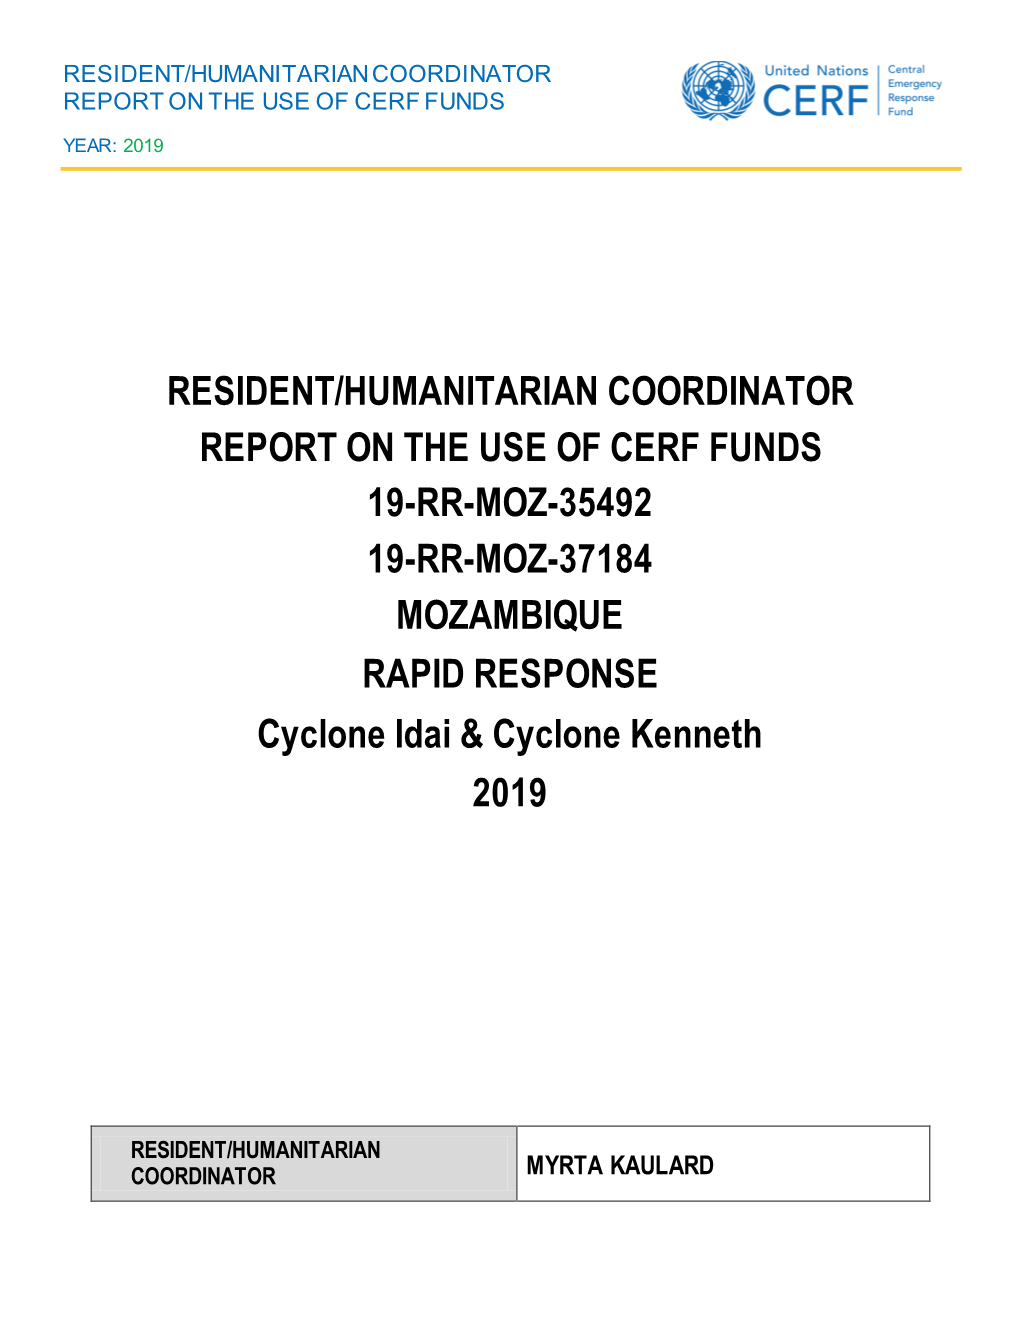 MOZAMBIQUE RAPID RESPONSE Cyclone Idai & Cyclone Kenneth 2019